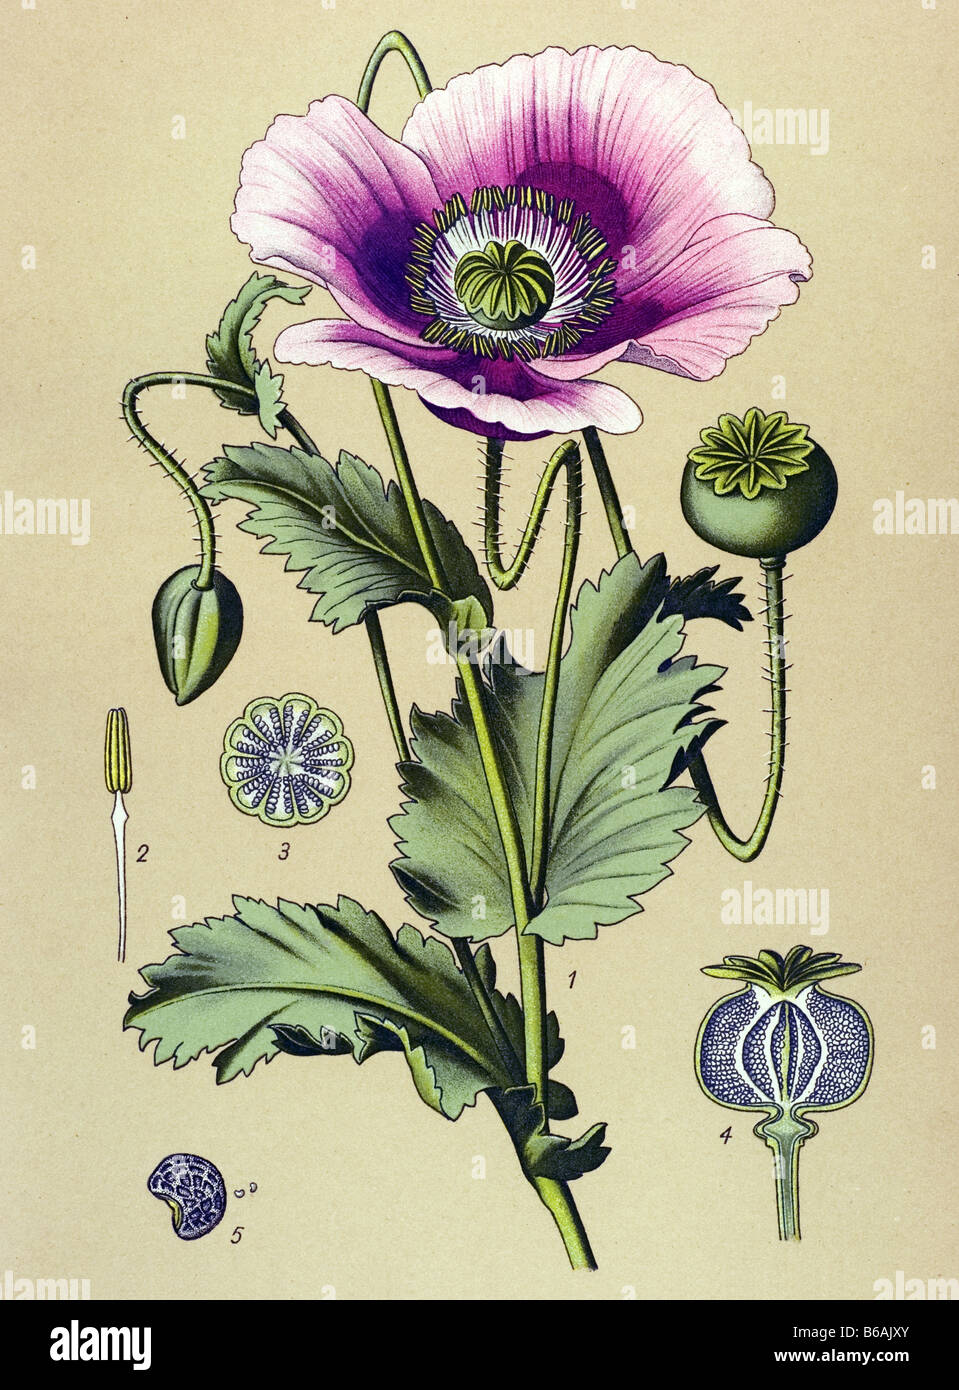 Opium poppy, Papaver somniferum poisonous plants illustrations Stock Photo